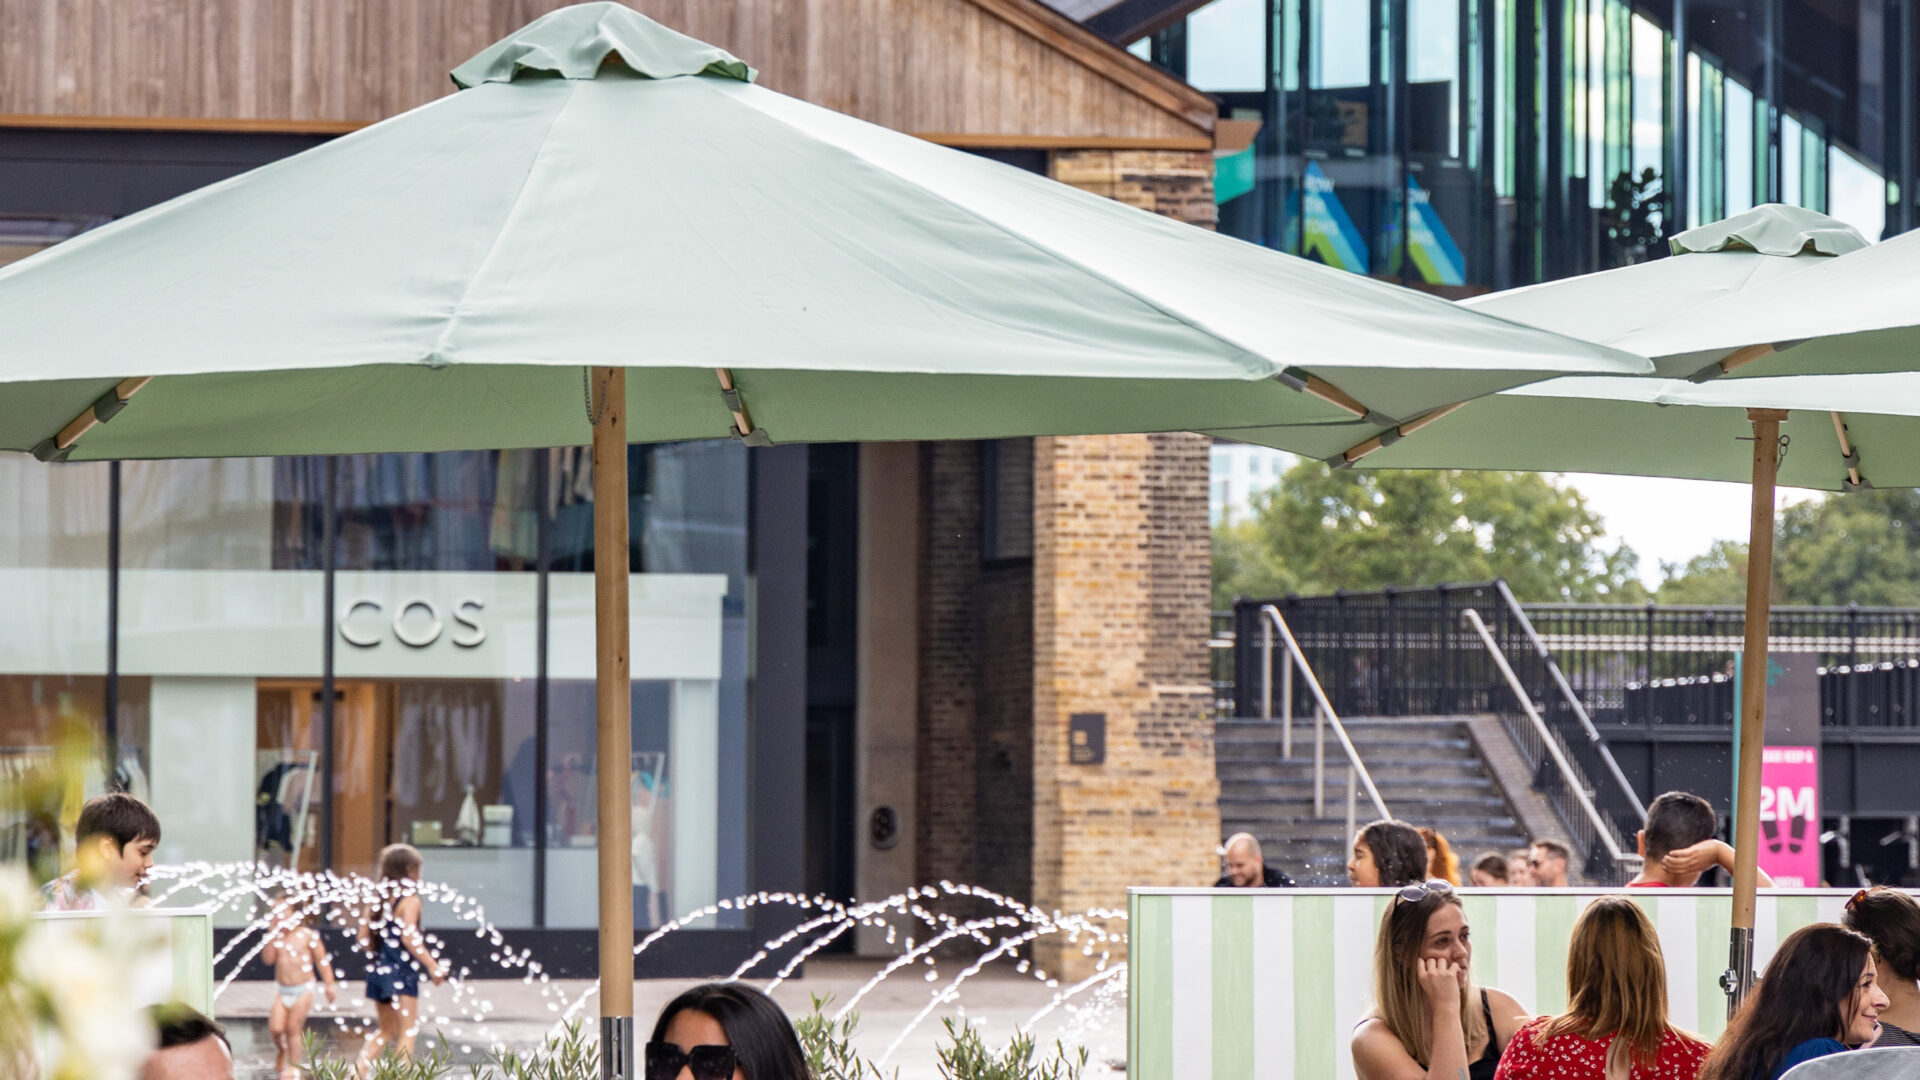 Lina Stores Piazza restaurant terrace, Lewis Cubitt Square, King's Cross